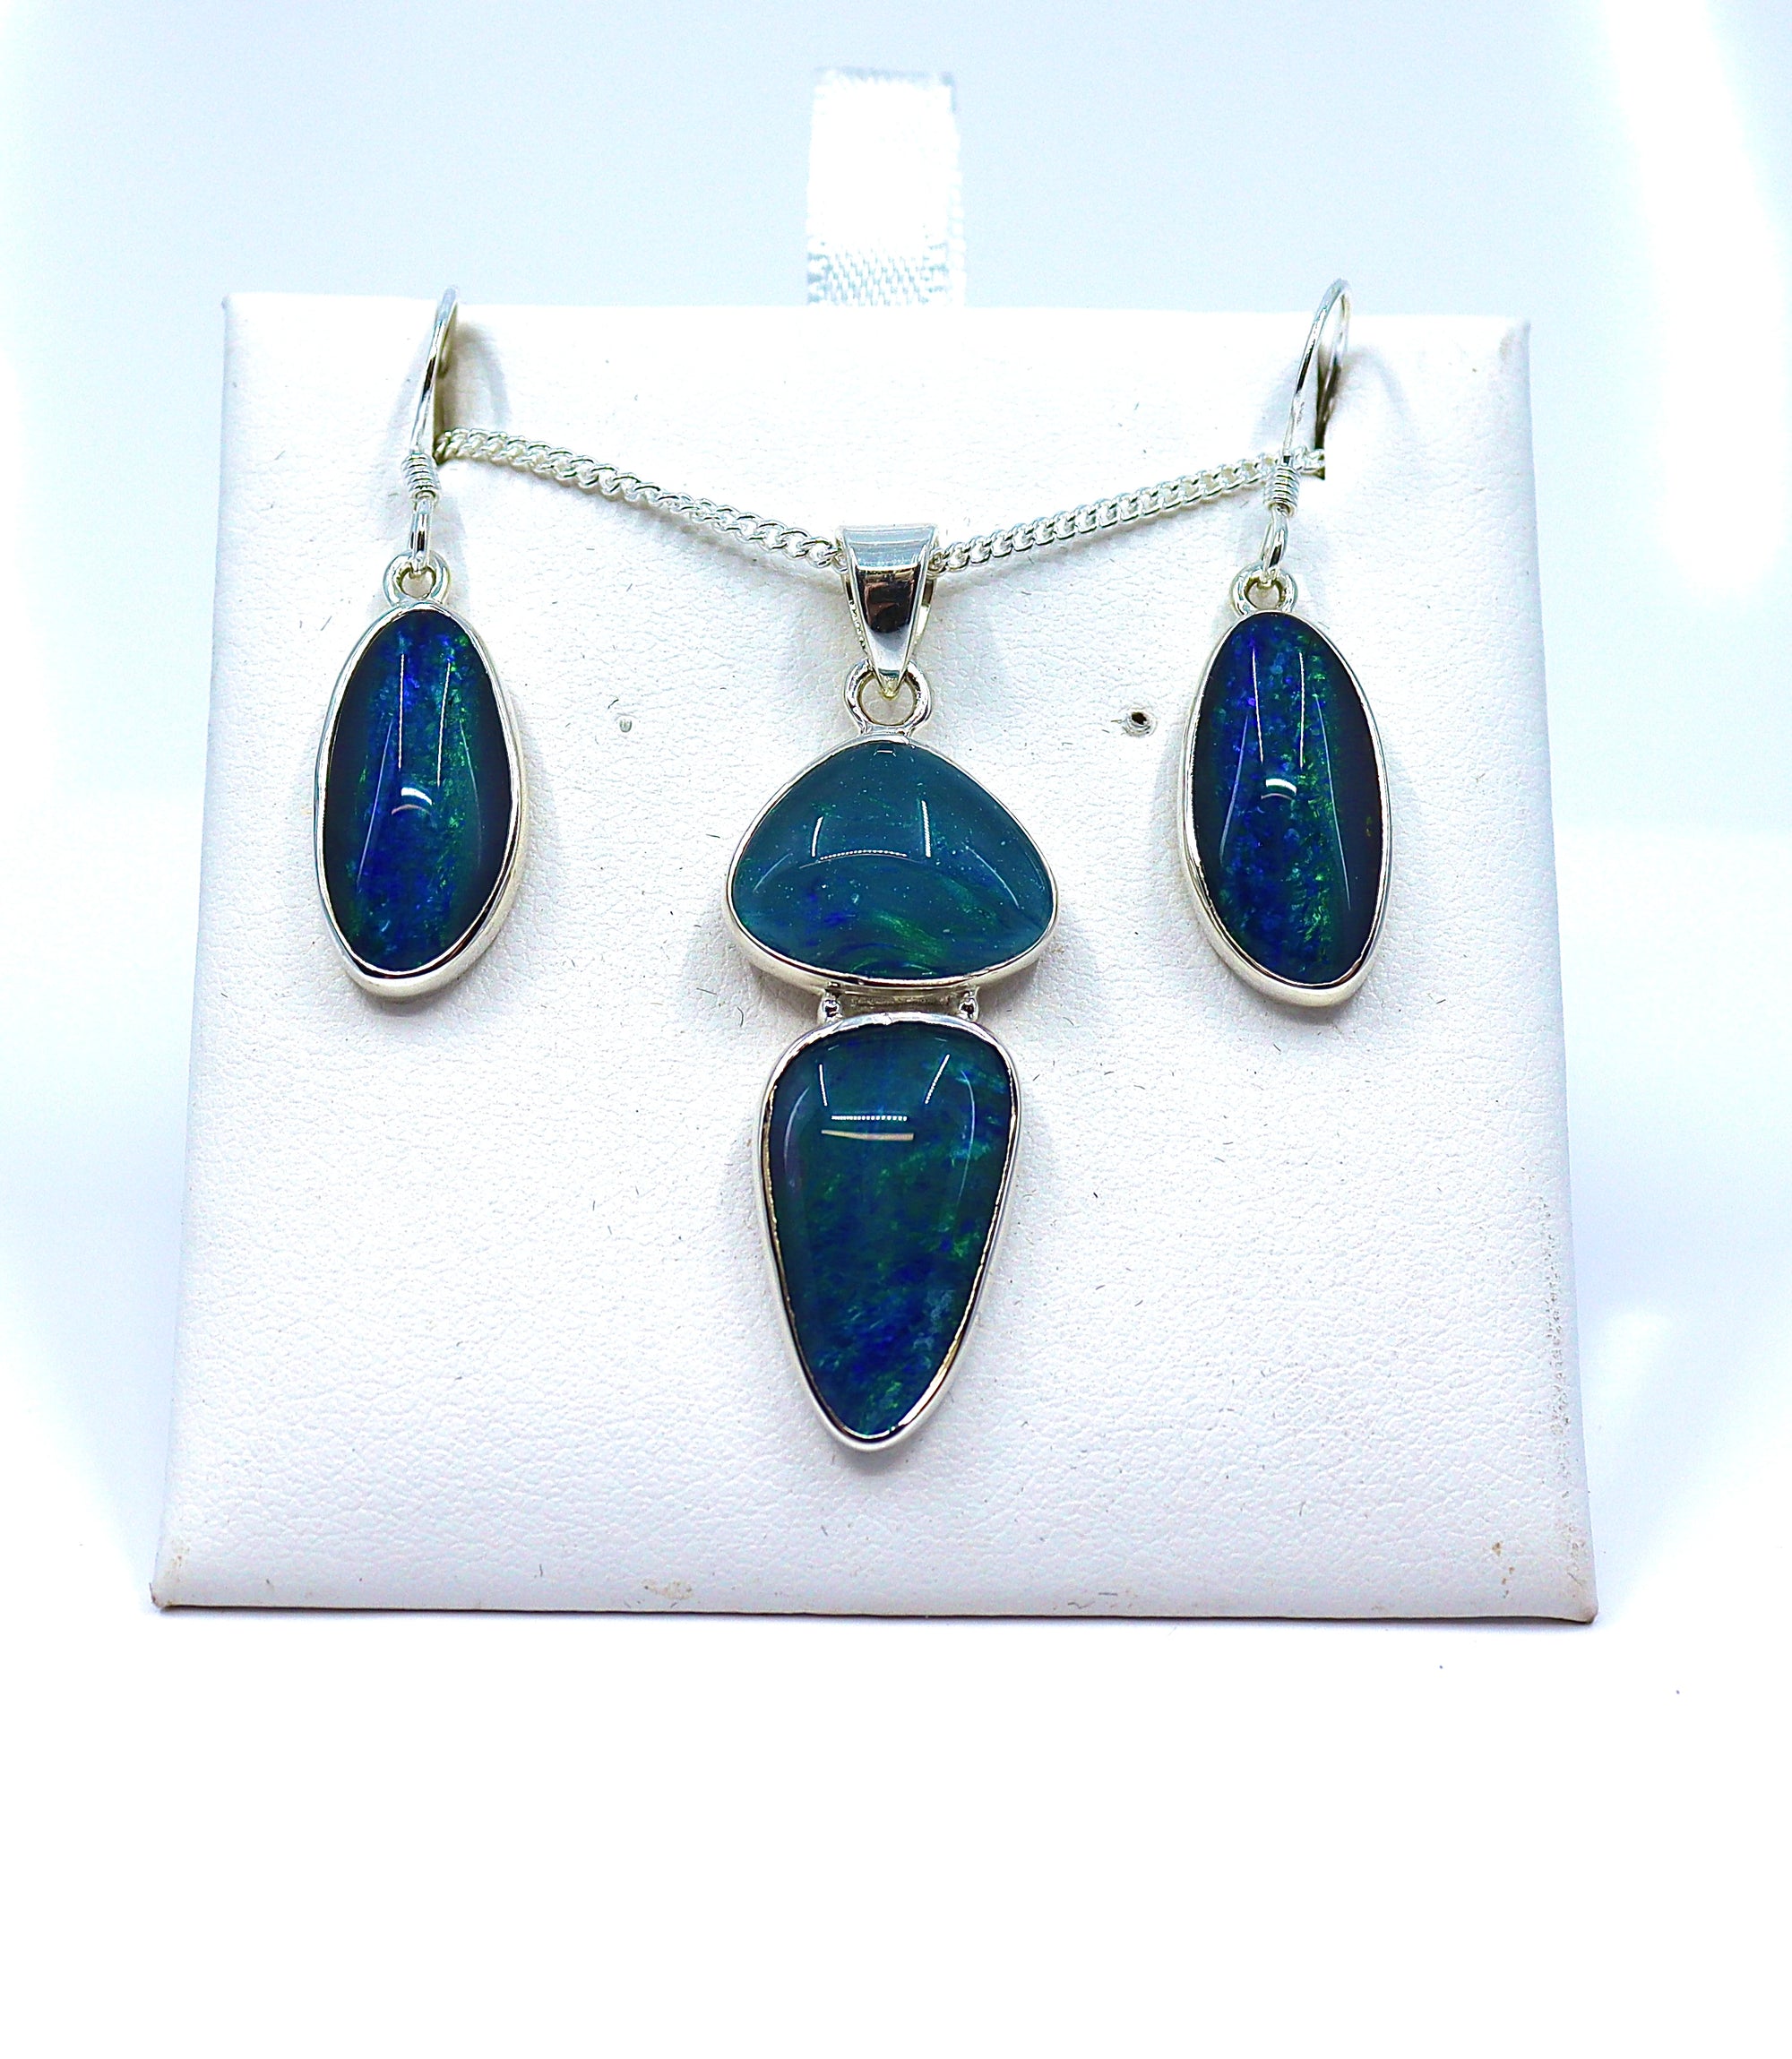 Opal pendant and drop earrings